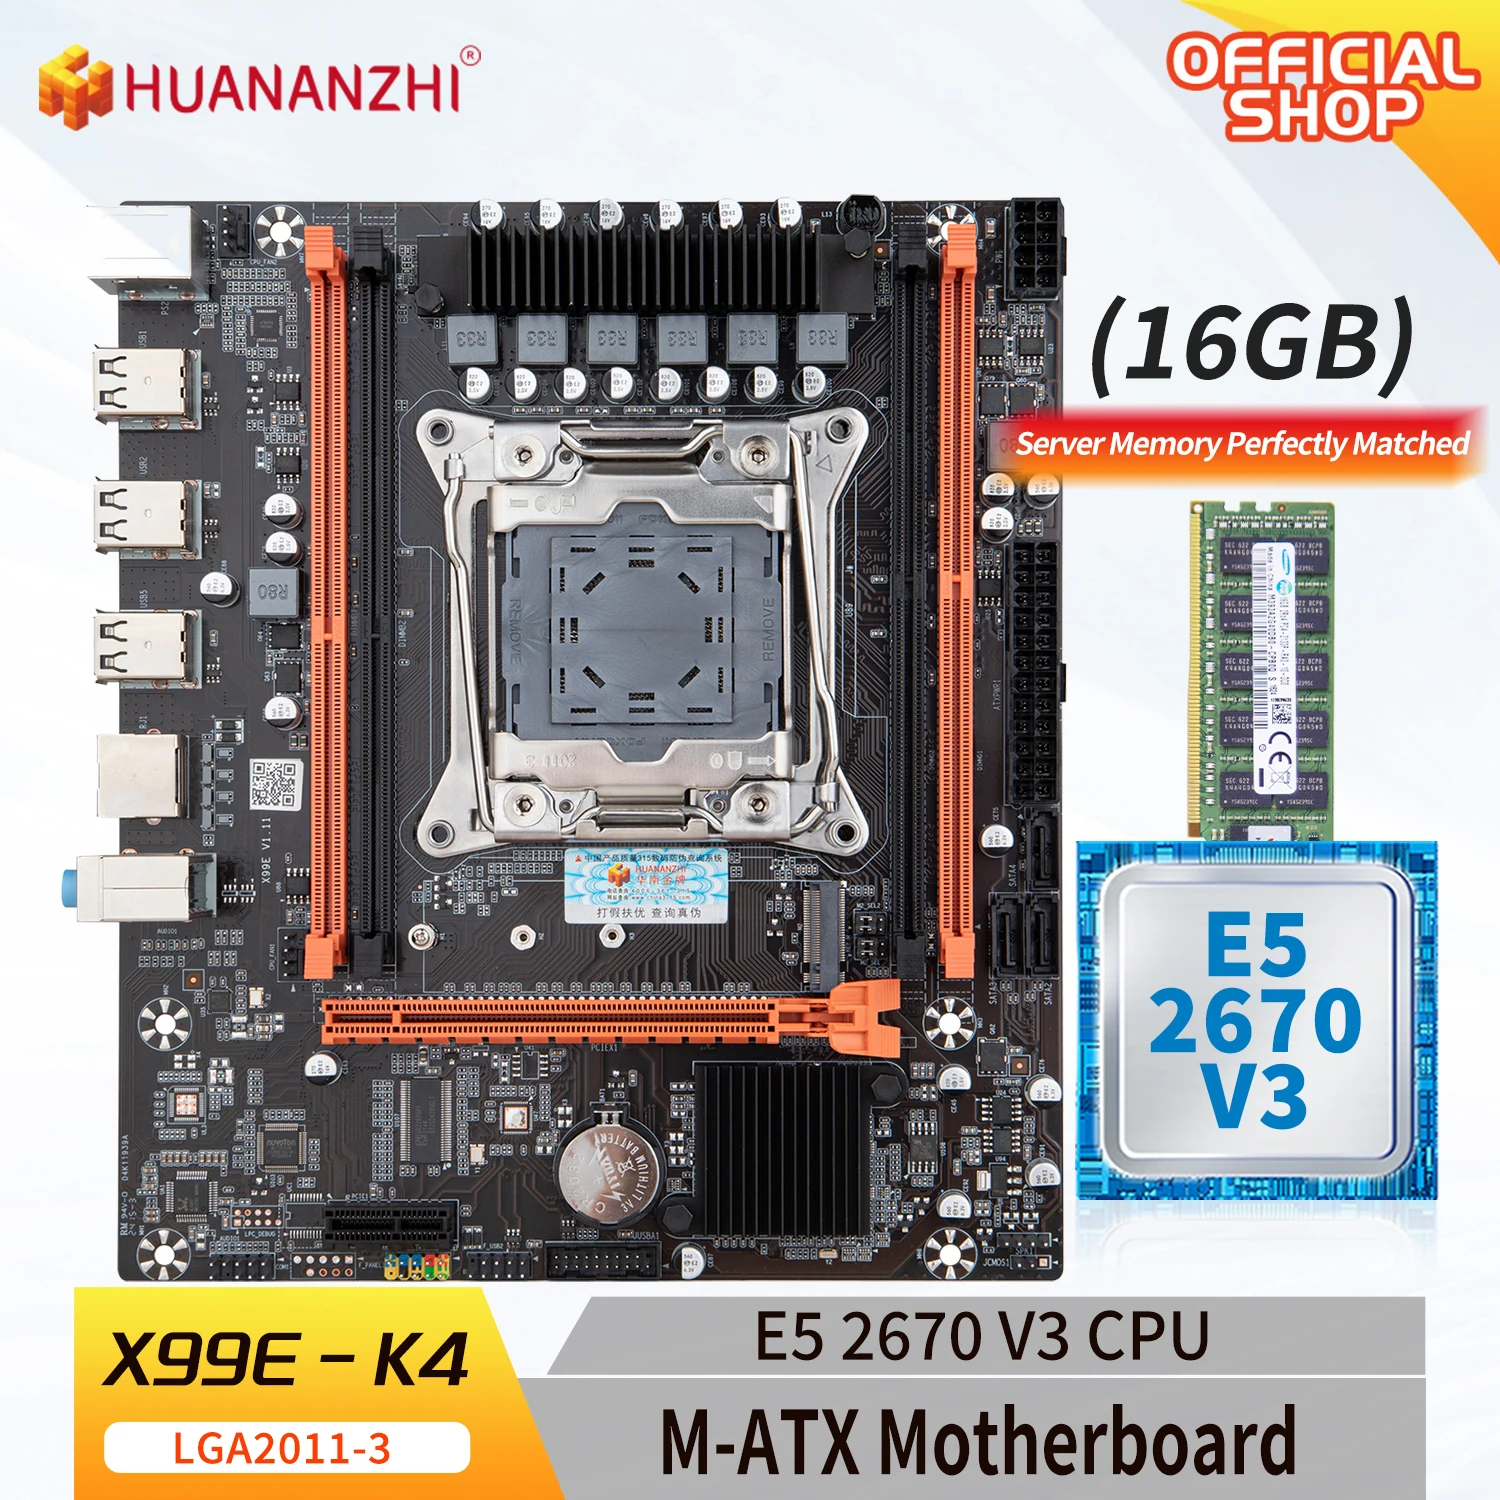 

HUANANZHI X99 E K4 LGA 2011-3 XEON X99 Motherboard with Intel E5 2670 V3 with 1*16G DDR4 ECC memory combo kit set M.2 NVME